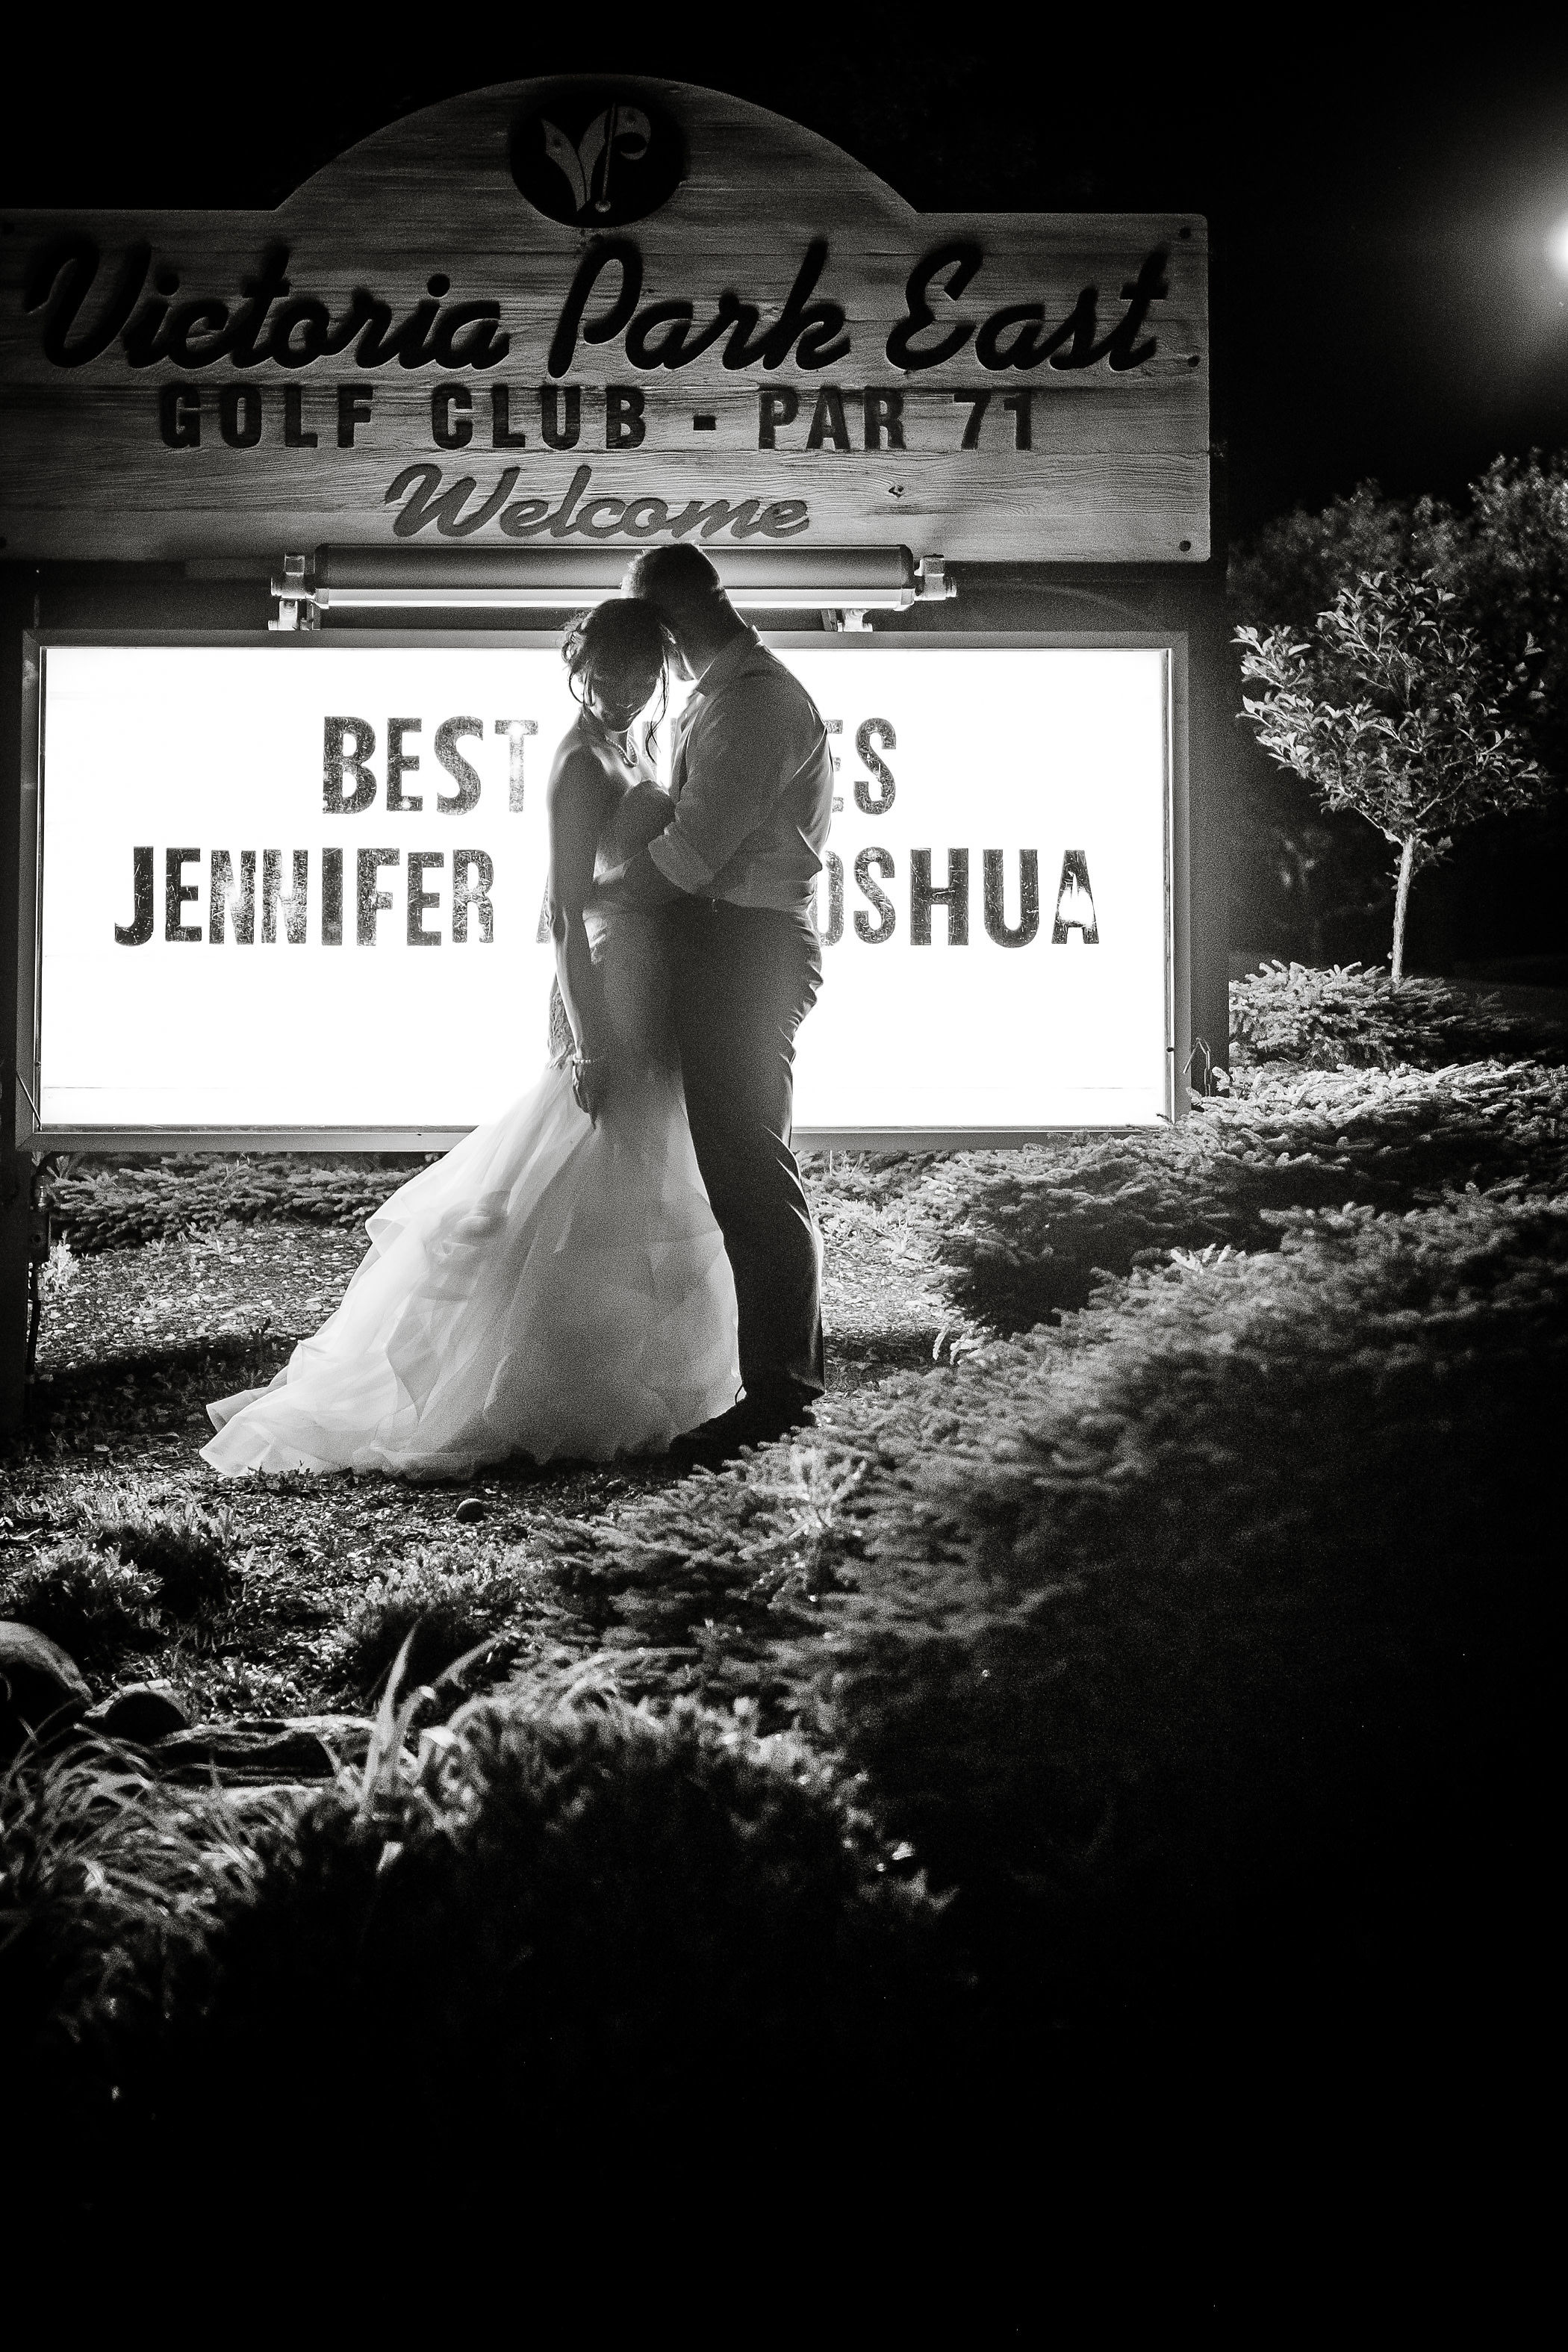 Kitchener Wedding Photographers – Jennifer & Joshua – Victoria Park East Golf Club